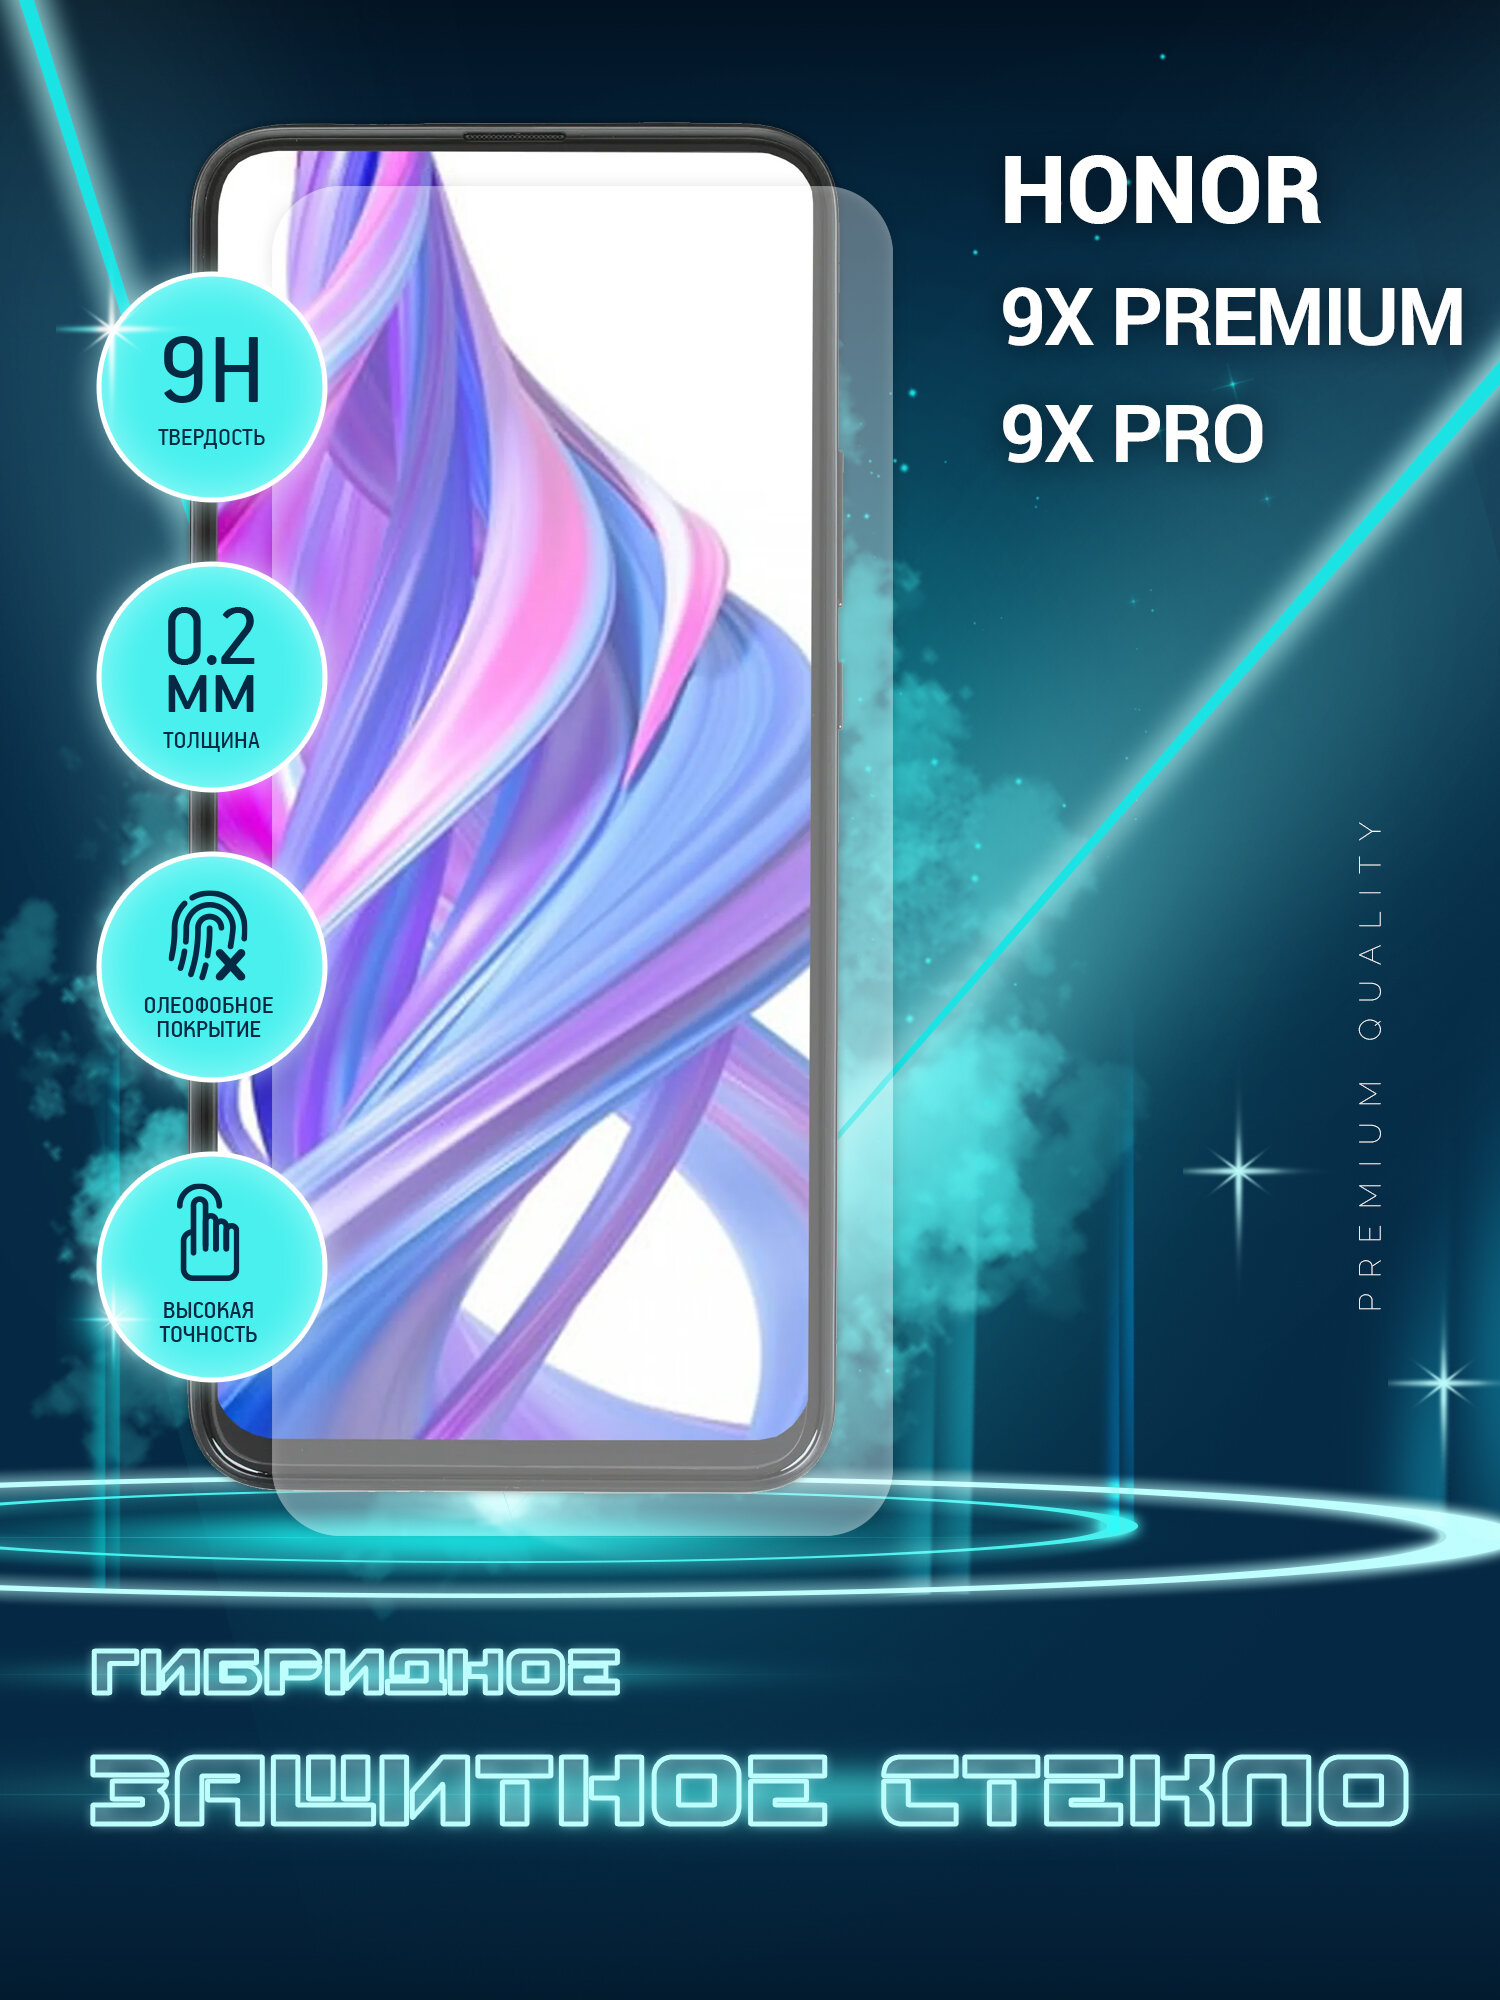 Защитное стекло для Honor 9X Premium 9X Pro Хонор 9Х Премиум 9 Икс Про на экран гибридное (пленка + стекловолокно) Crystal boost